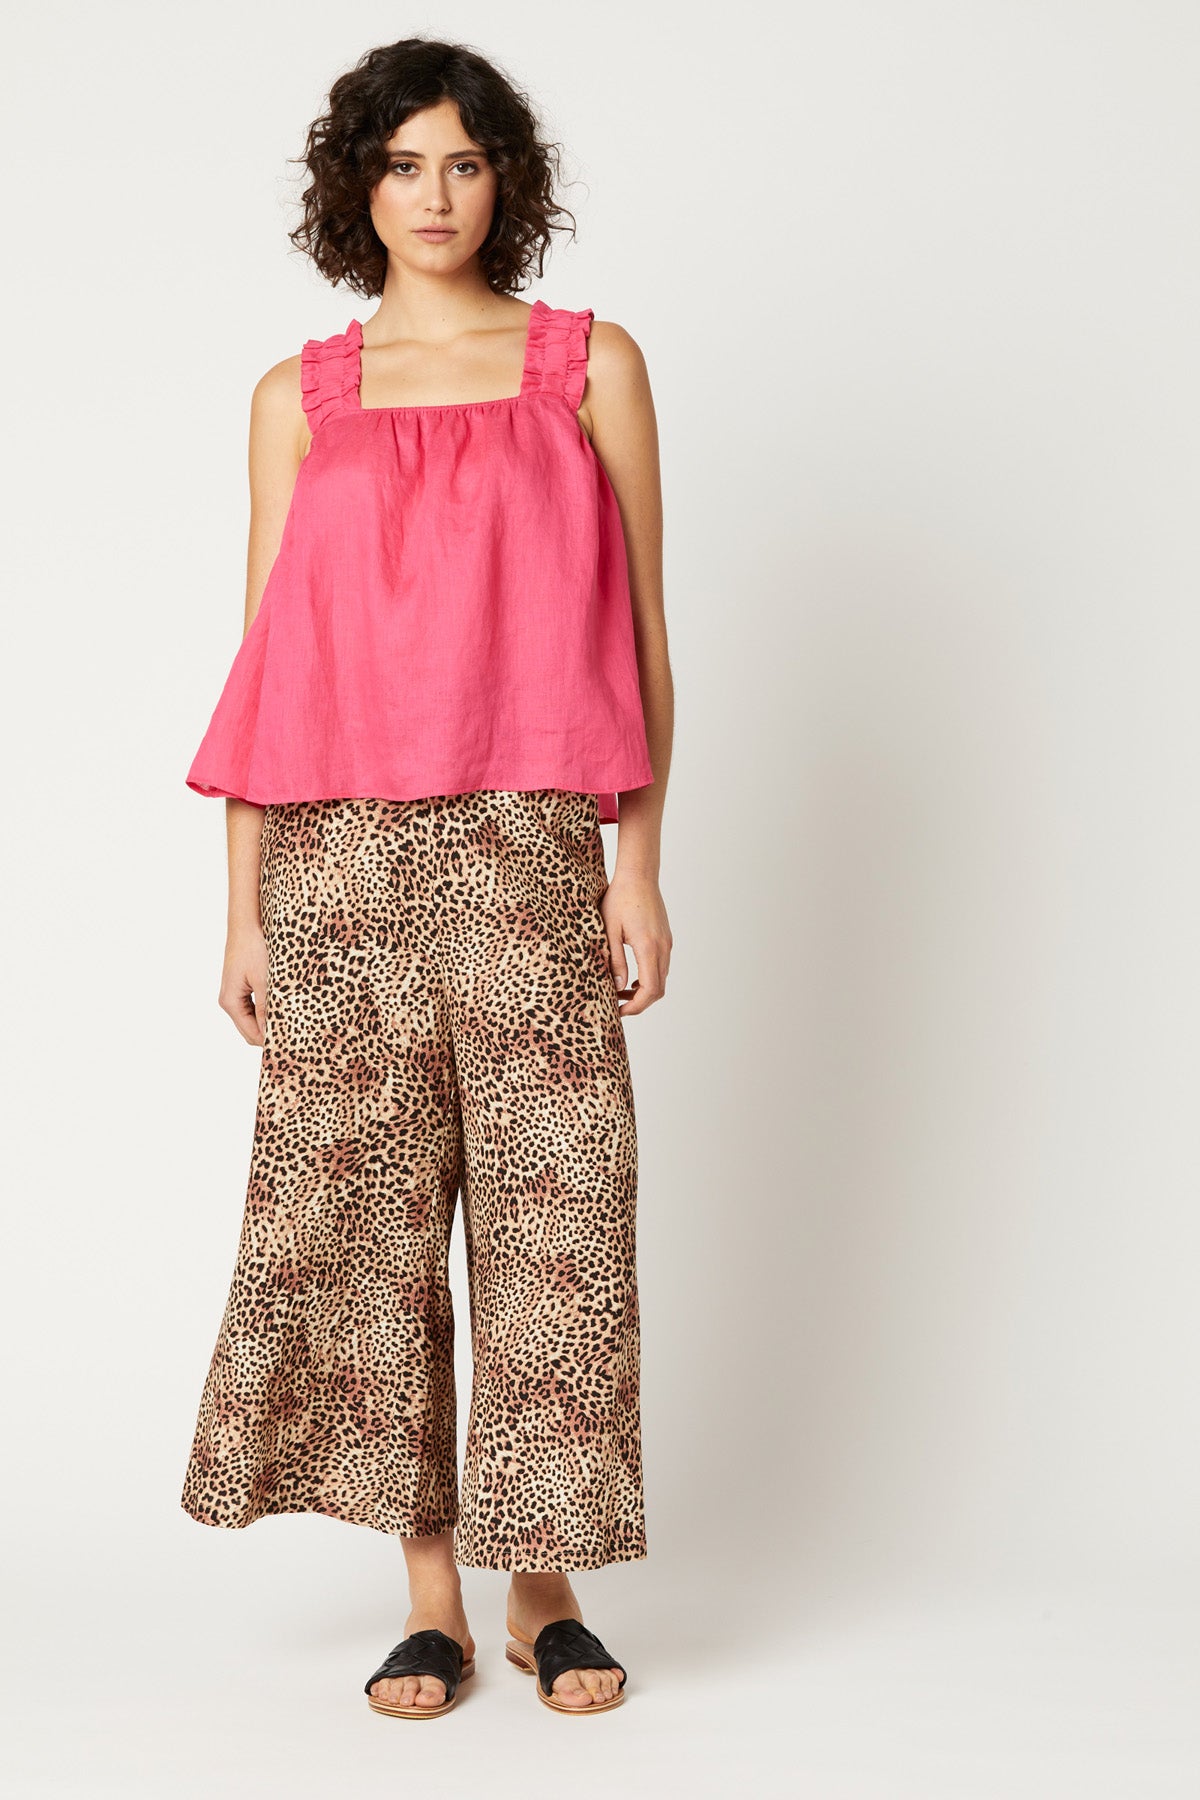 Nala Tank - Flamingo - eb&ive Clothing - Top Sleeveless Linen